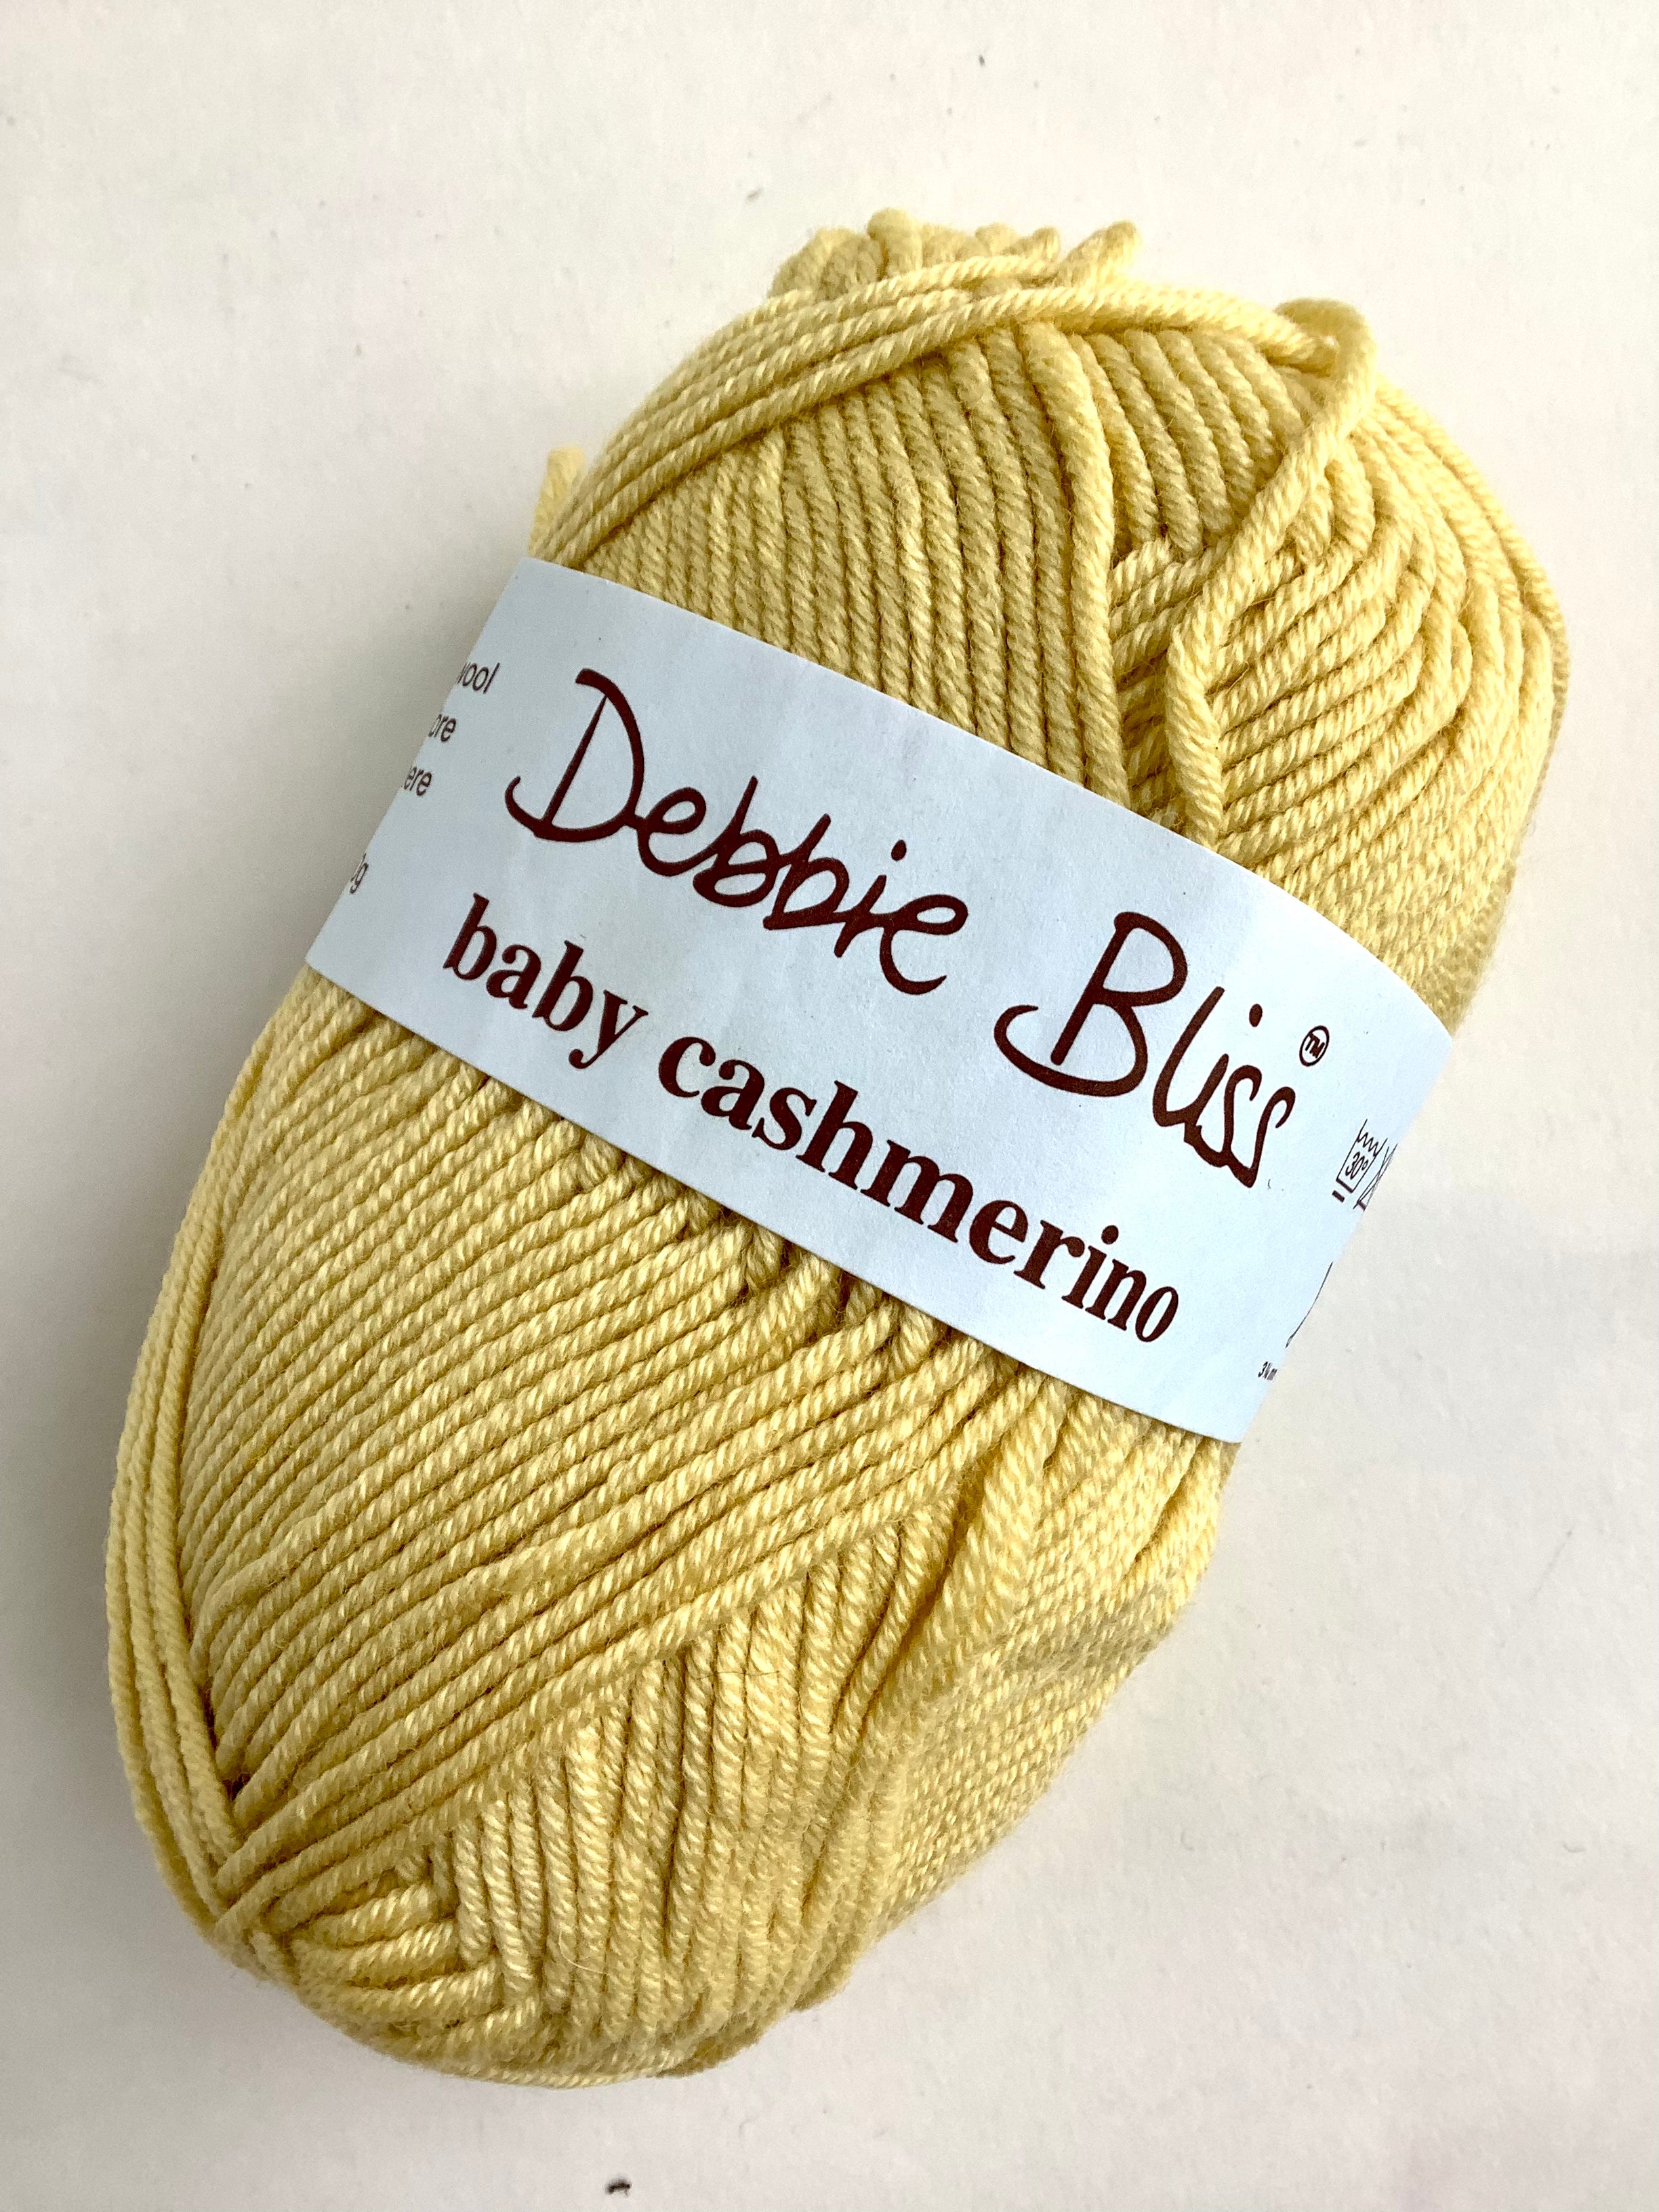 Debbie Bliss Baby Cashmerino Color: 340506 Lot: 353